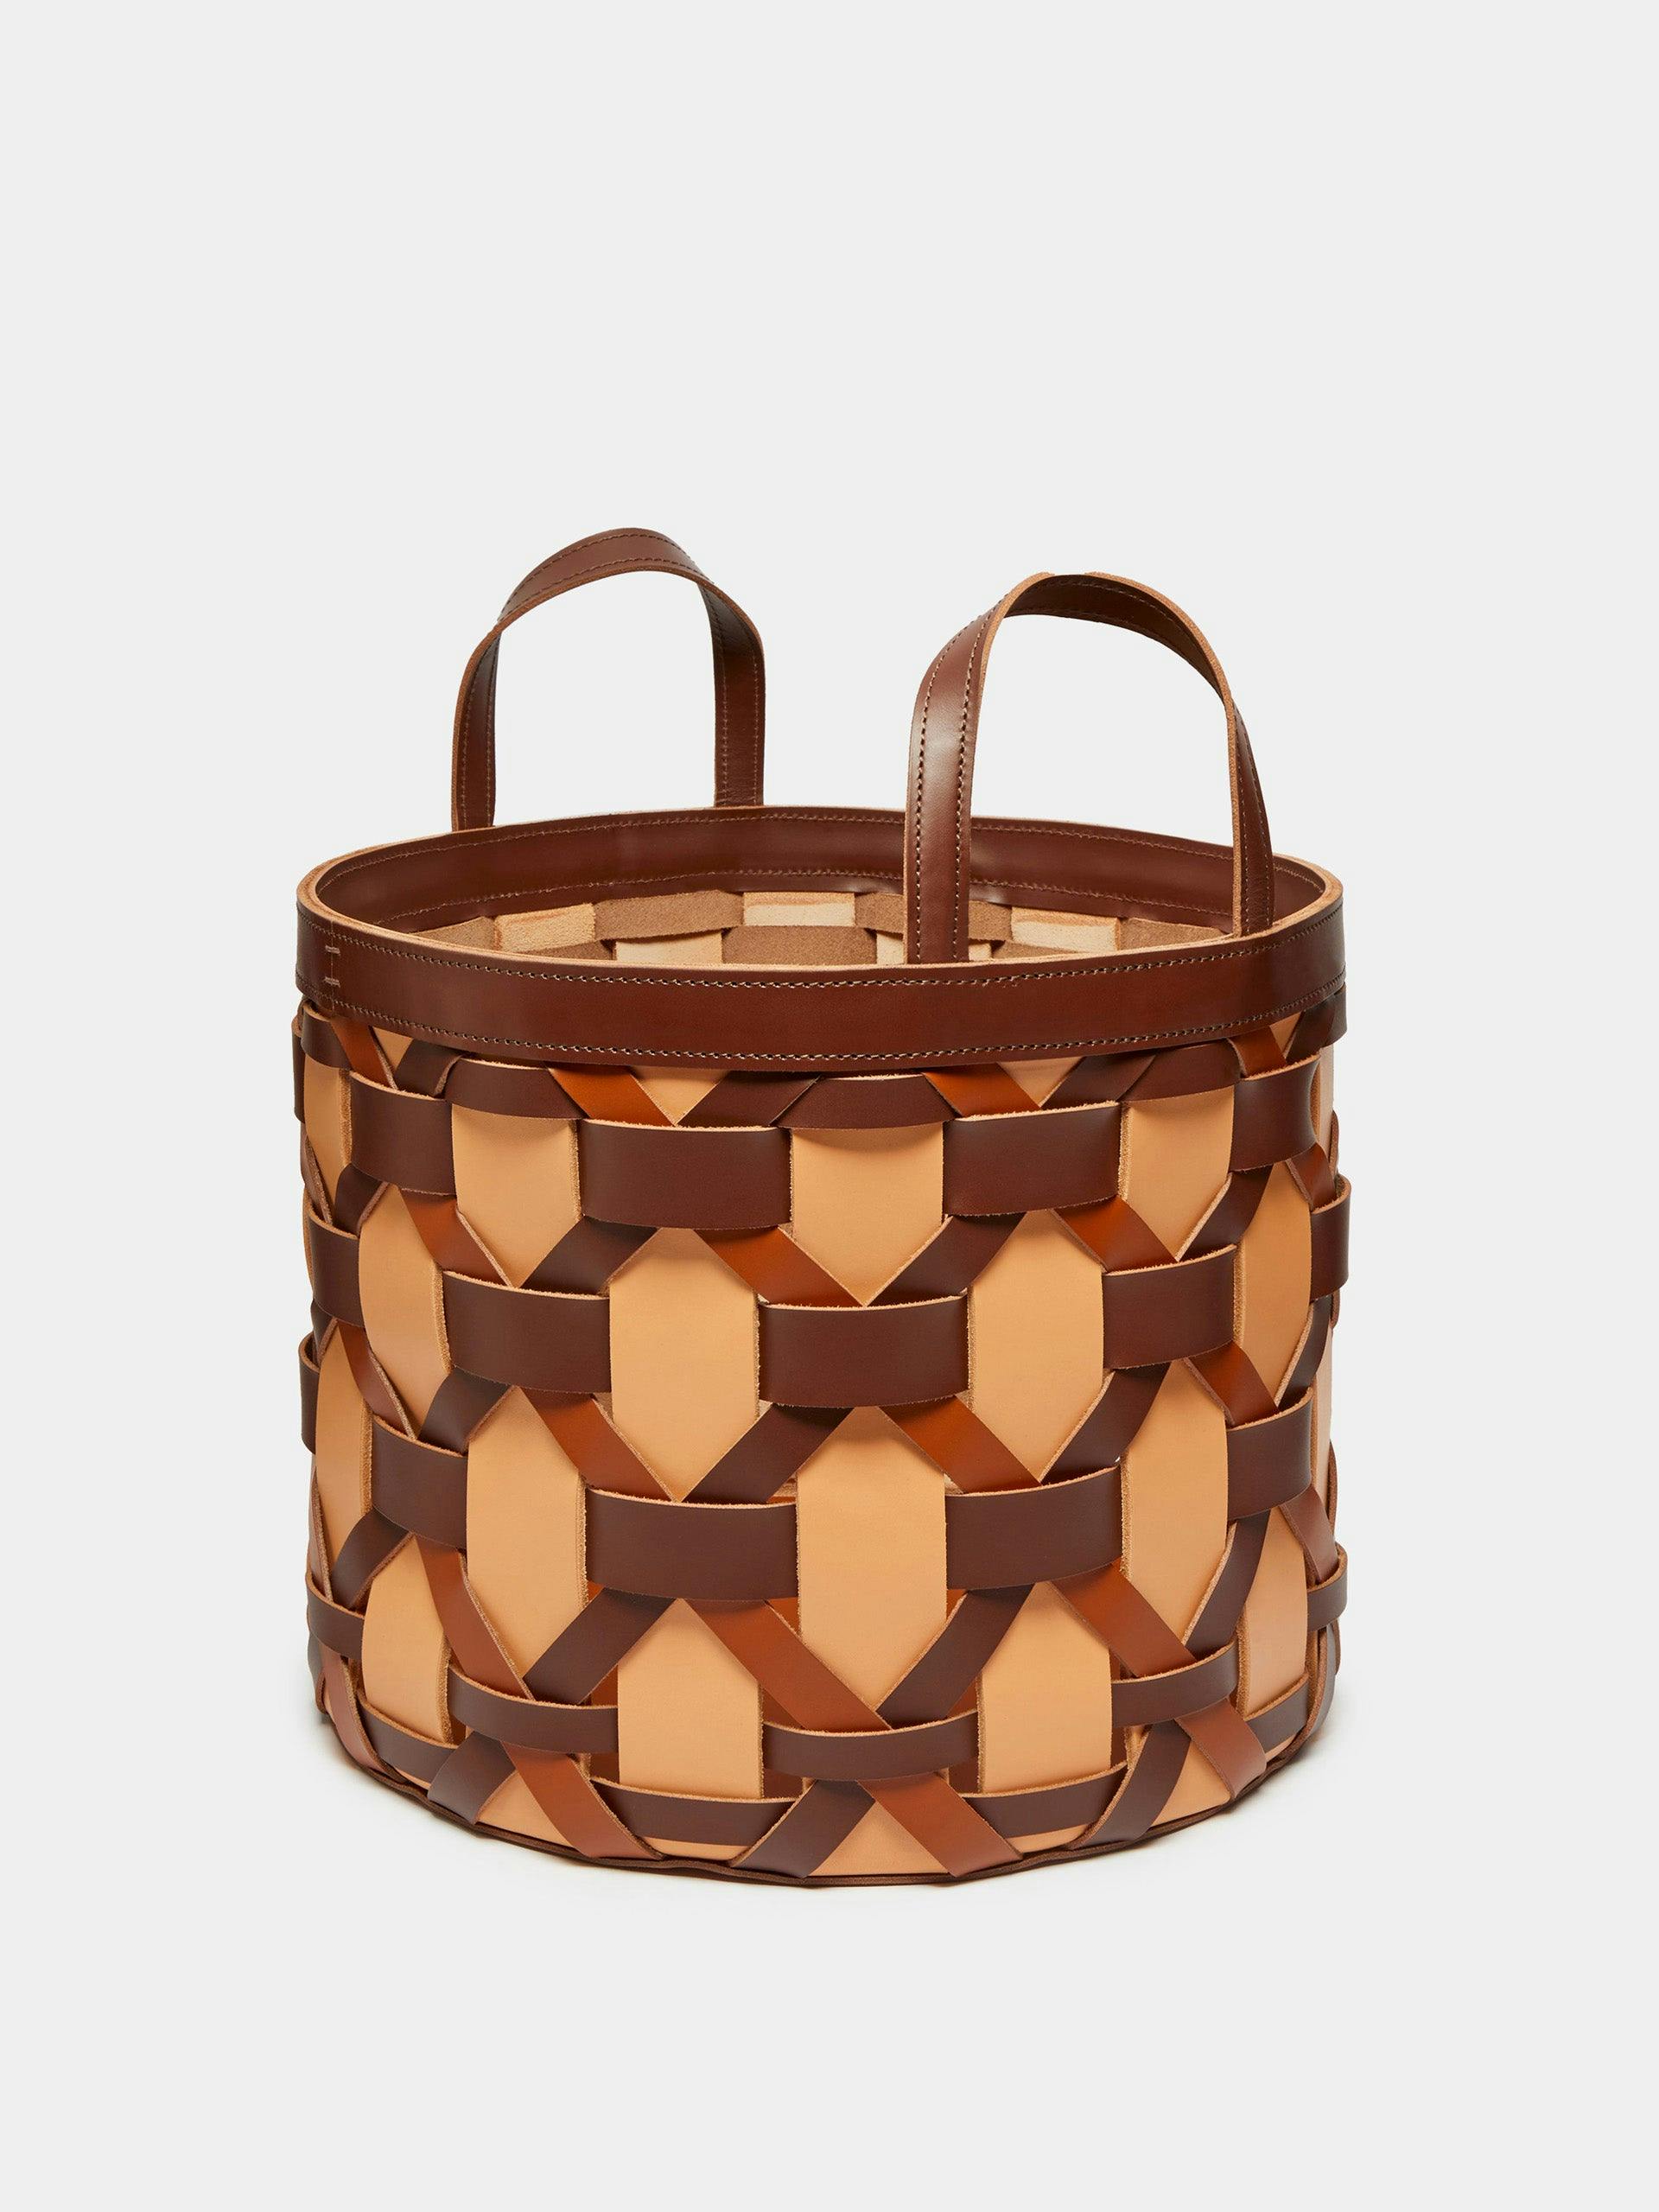 Palu Low Woven Leather Basket